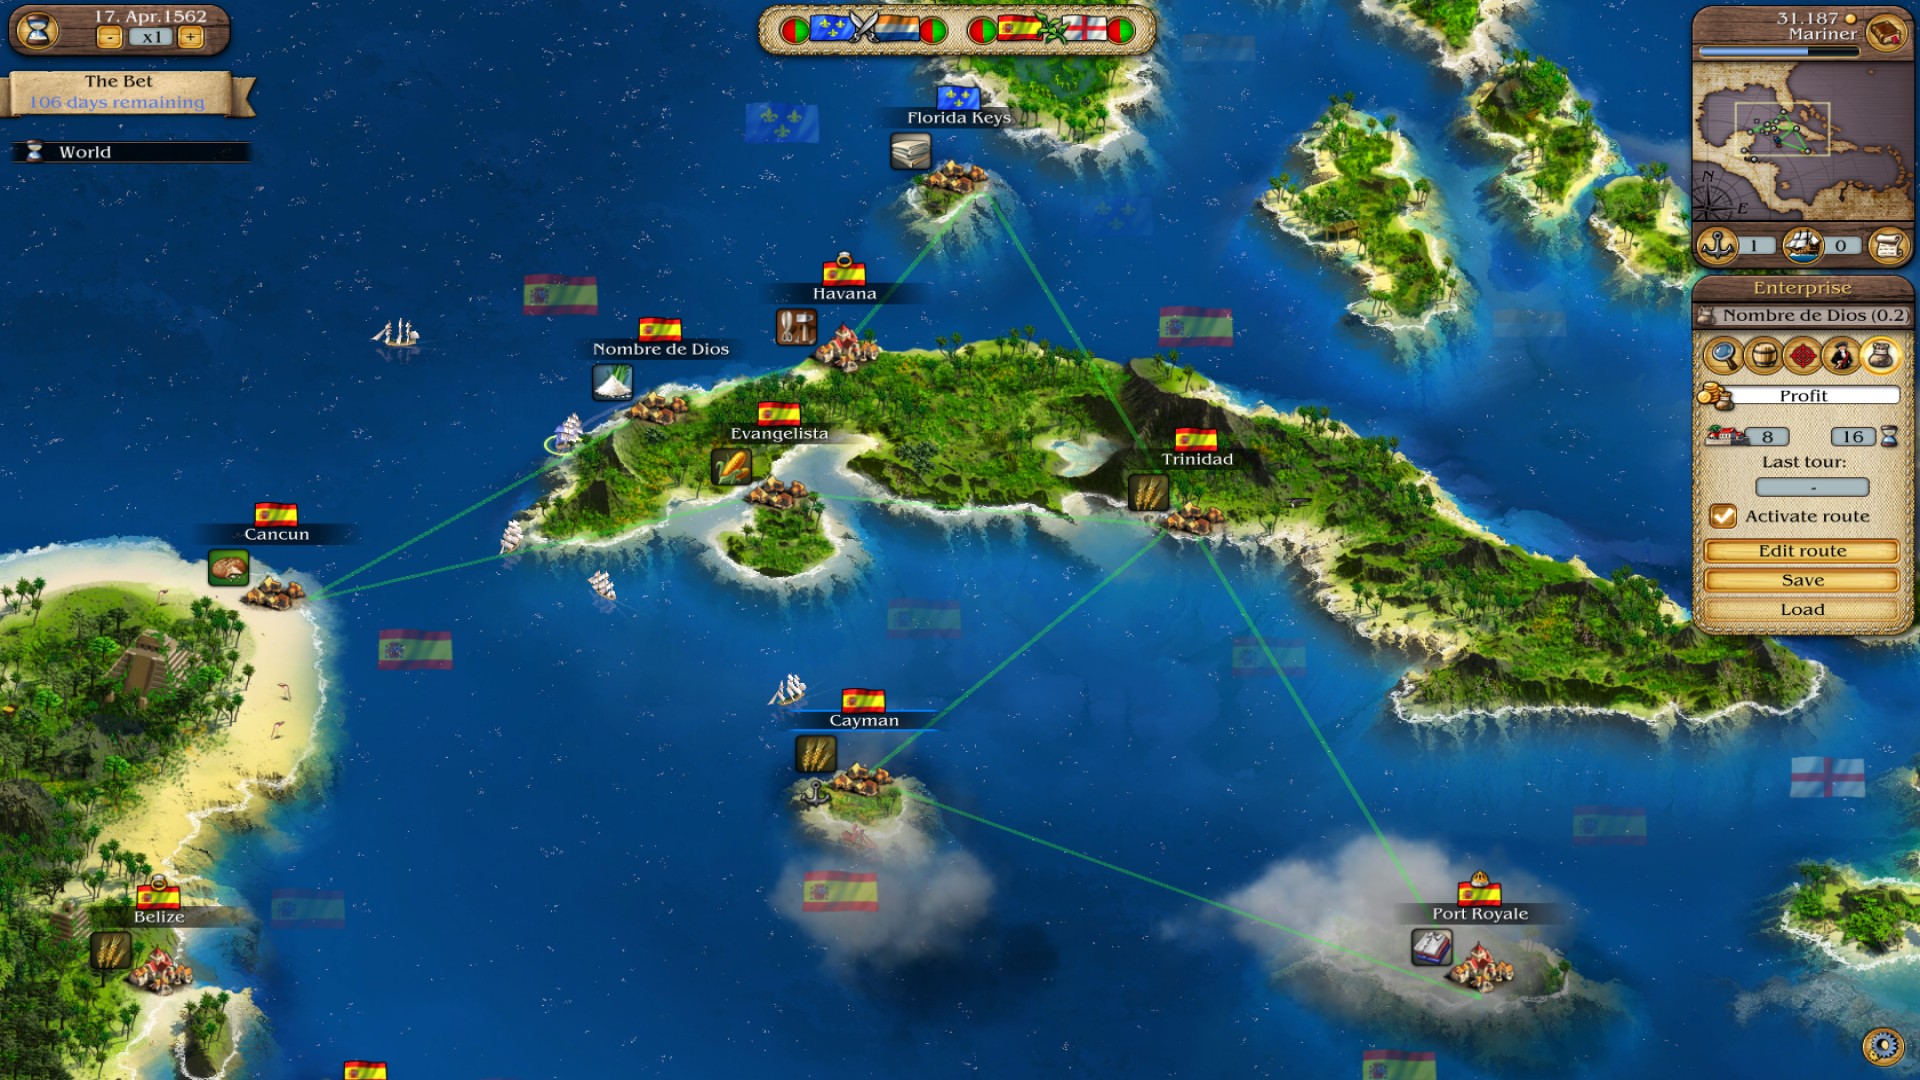 Port Royale 3: New Adventures DLC screenshot